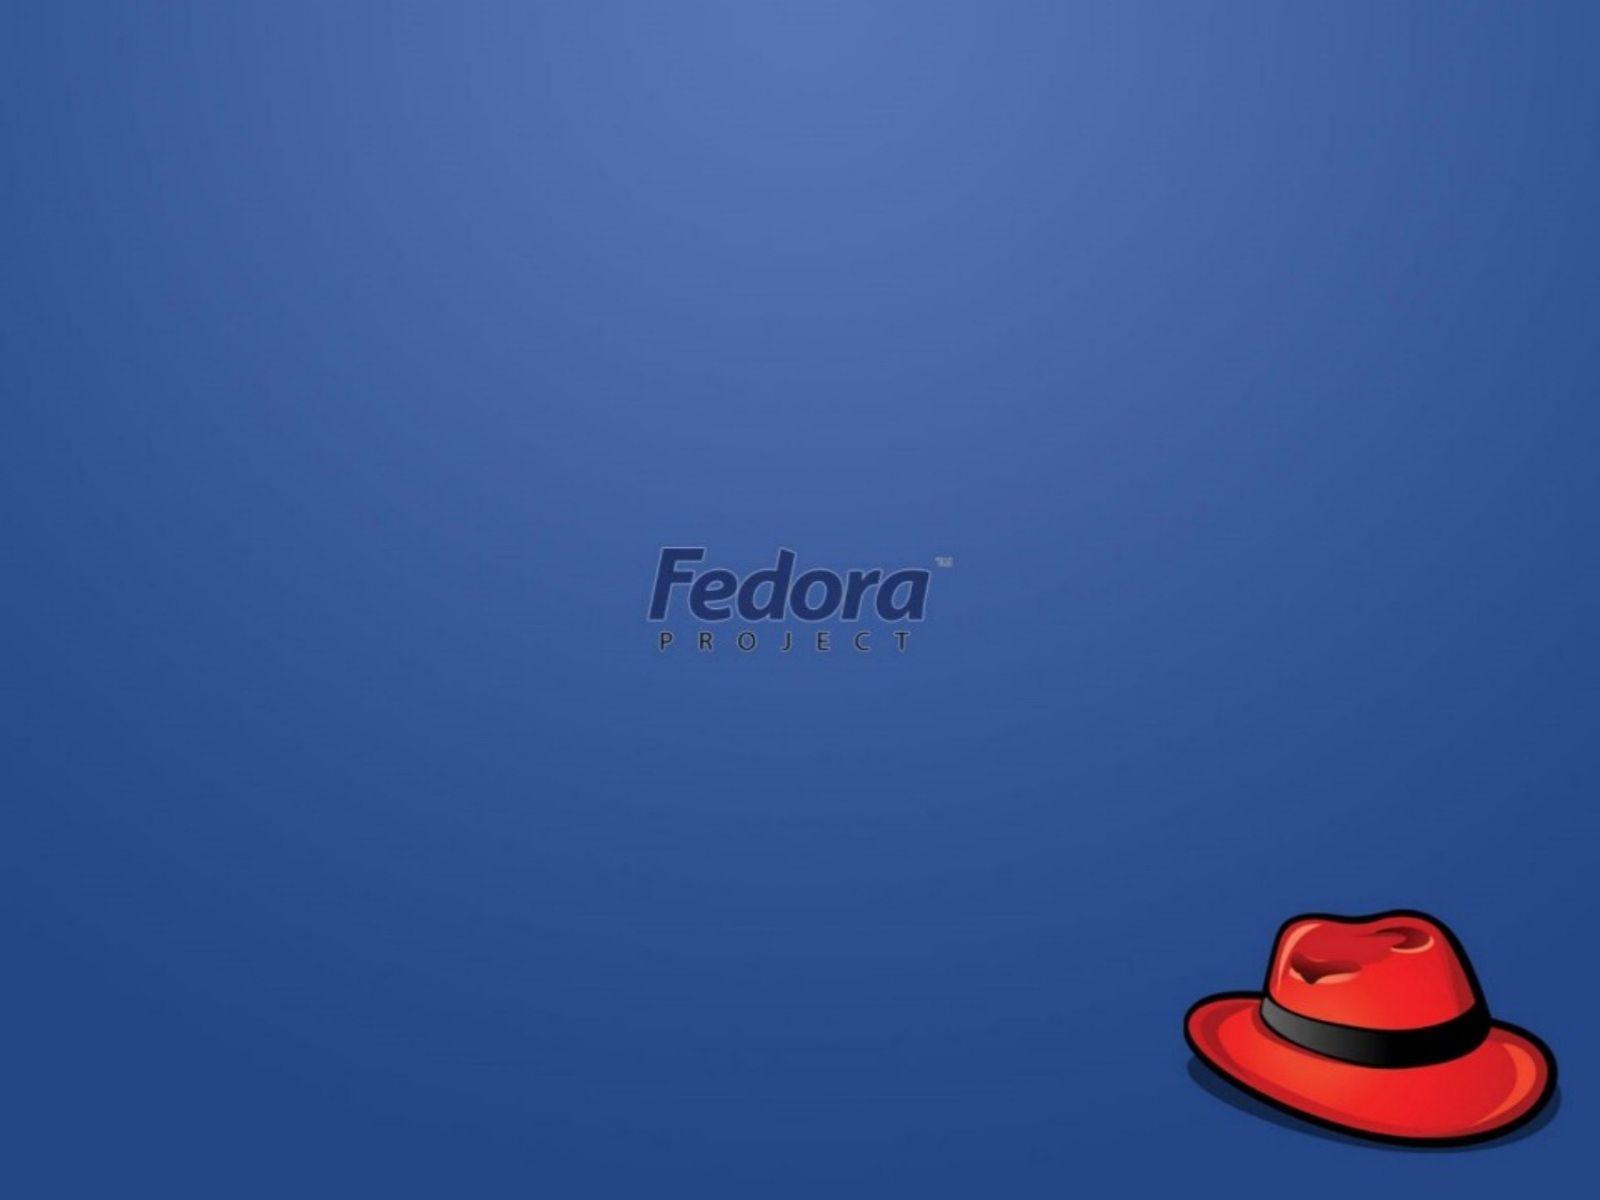 Fedora 30 Wallpapers Available To Download | LinuxAndUbuntu